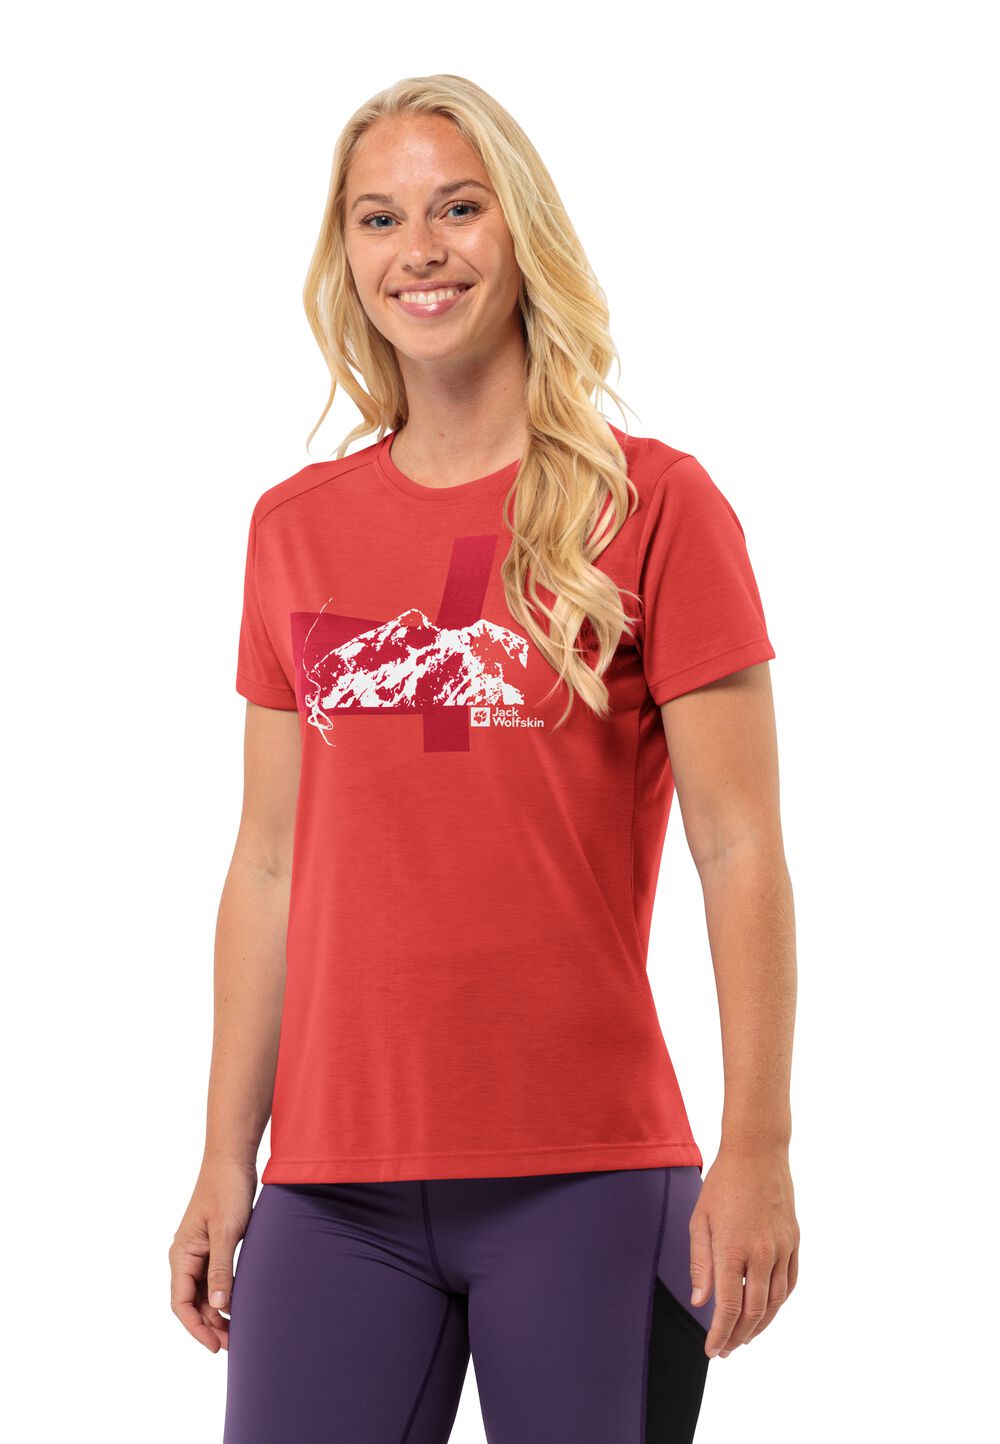 Jack Wolfskin Vonnan S S Graphic T-Shirt Women Functioneel shirt Dames M rood vibrant red